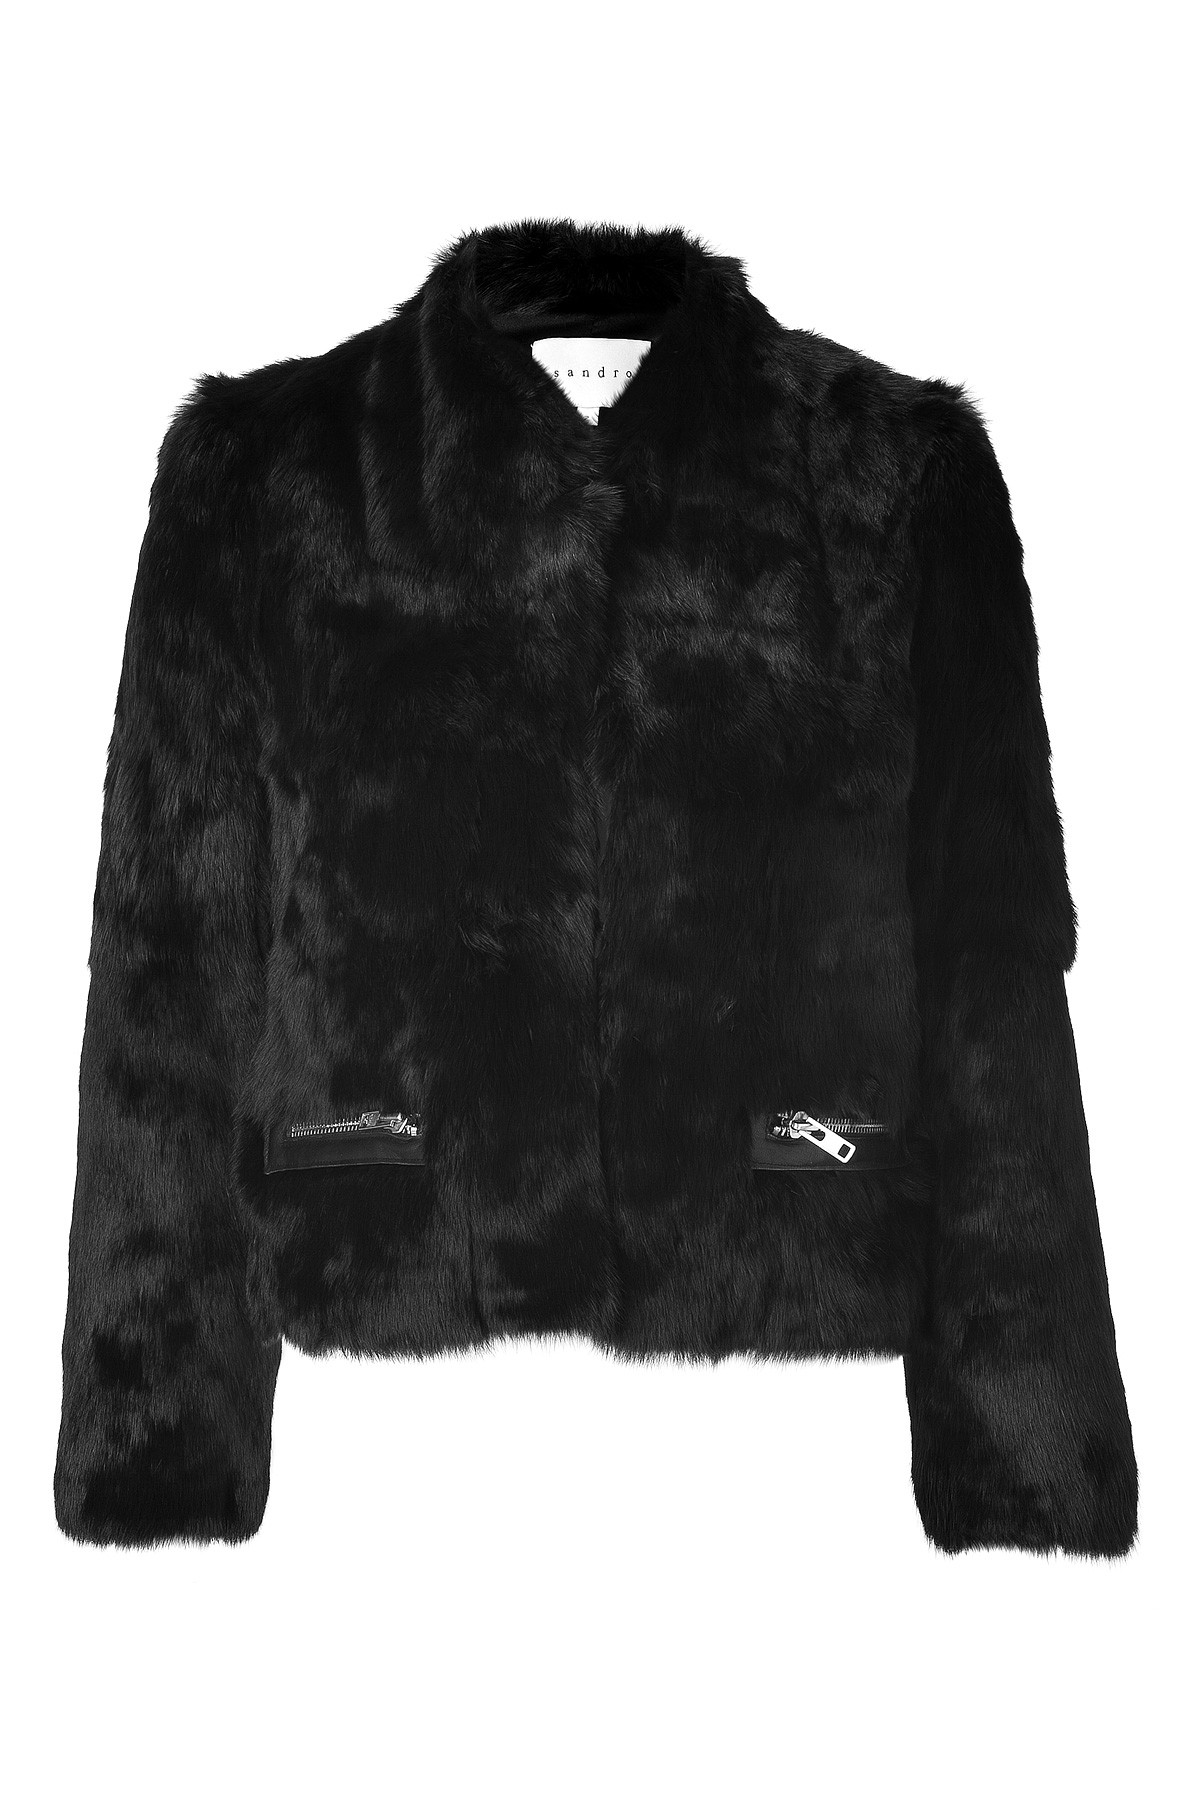 Sandro Black Rabbit Fur Jacket in Black | Lyst